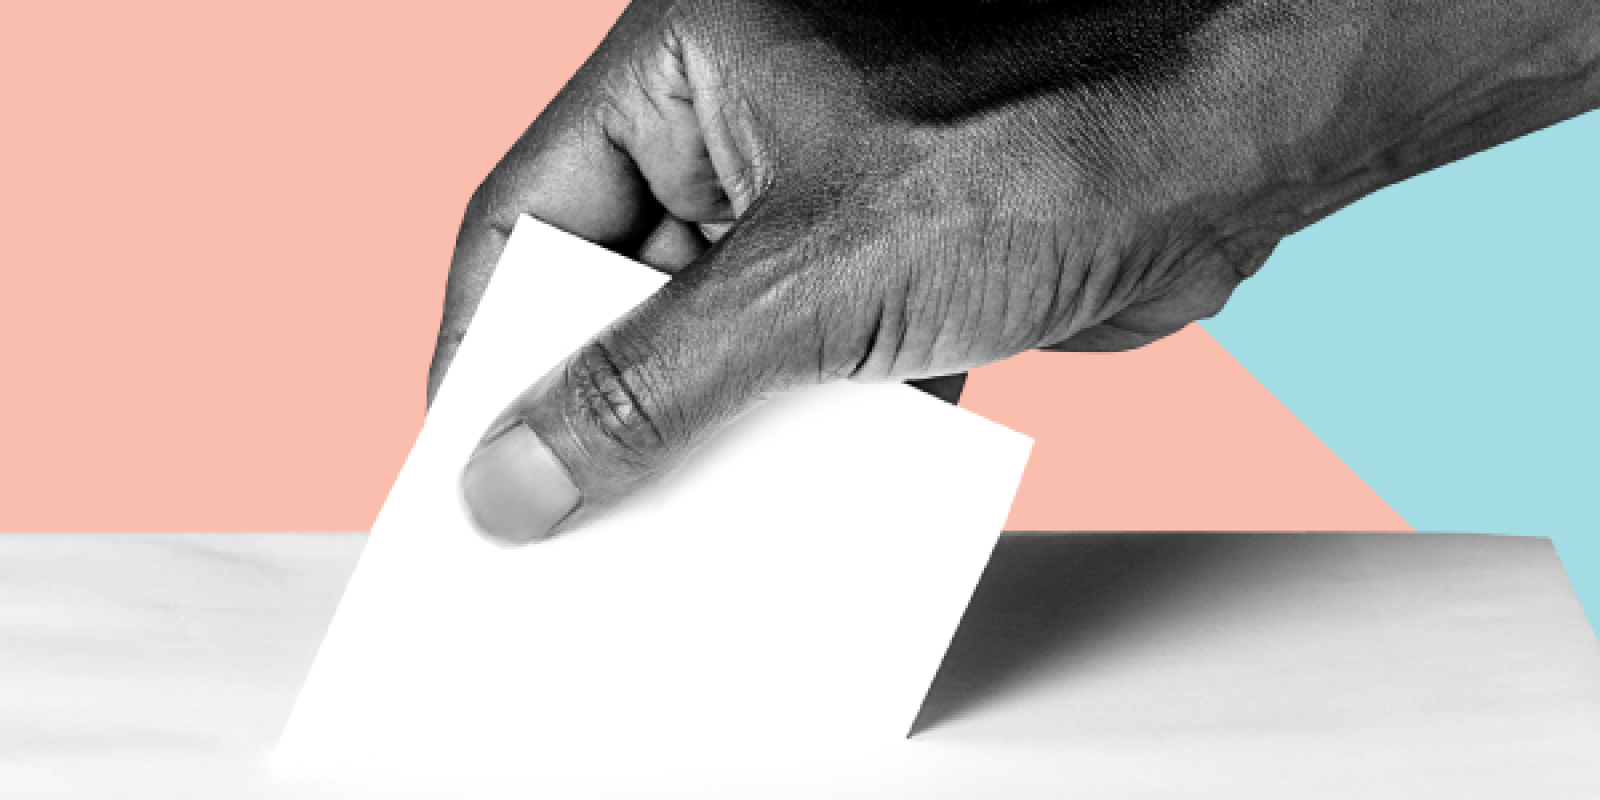 Hand placing ballot in box.